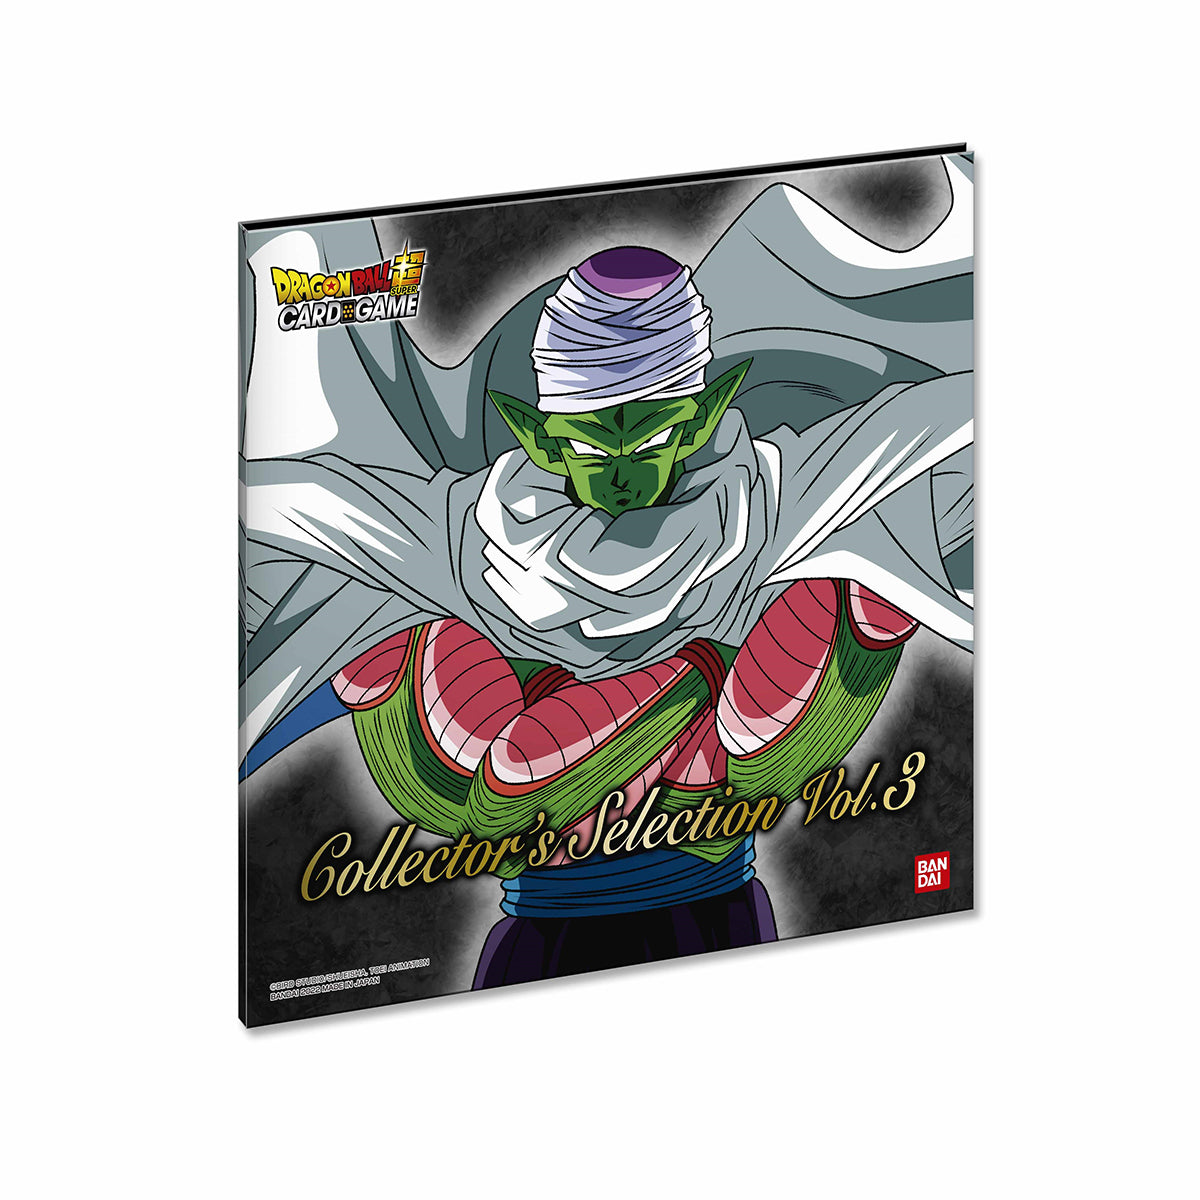 Buy Dragon Ball Super Card Game Premium Anniversary Box 2023 [BE23